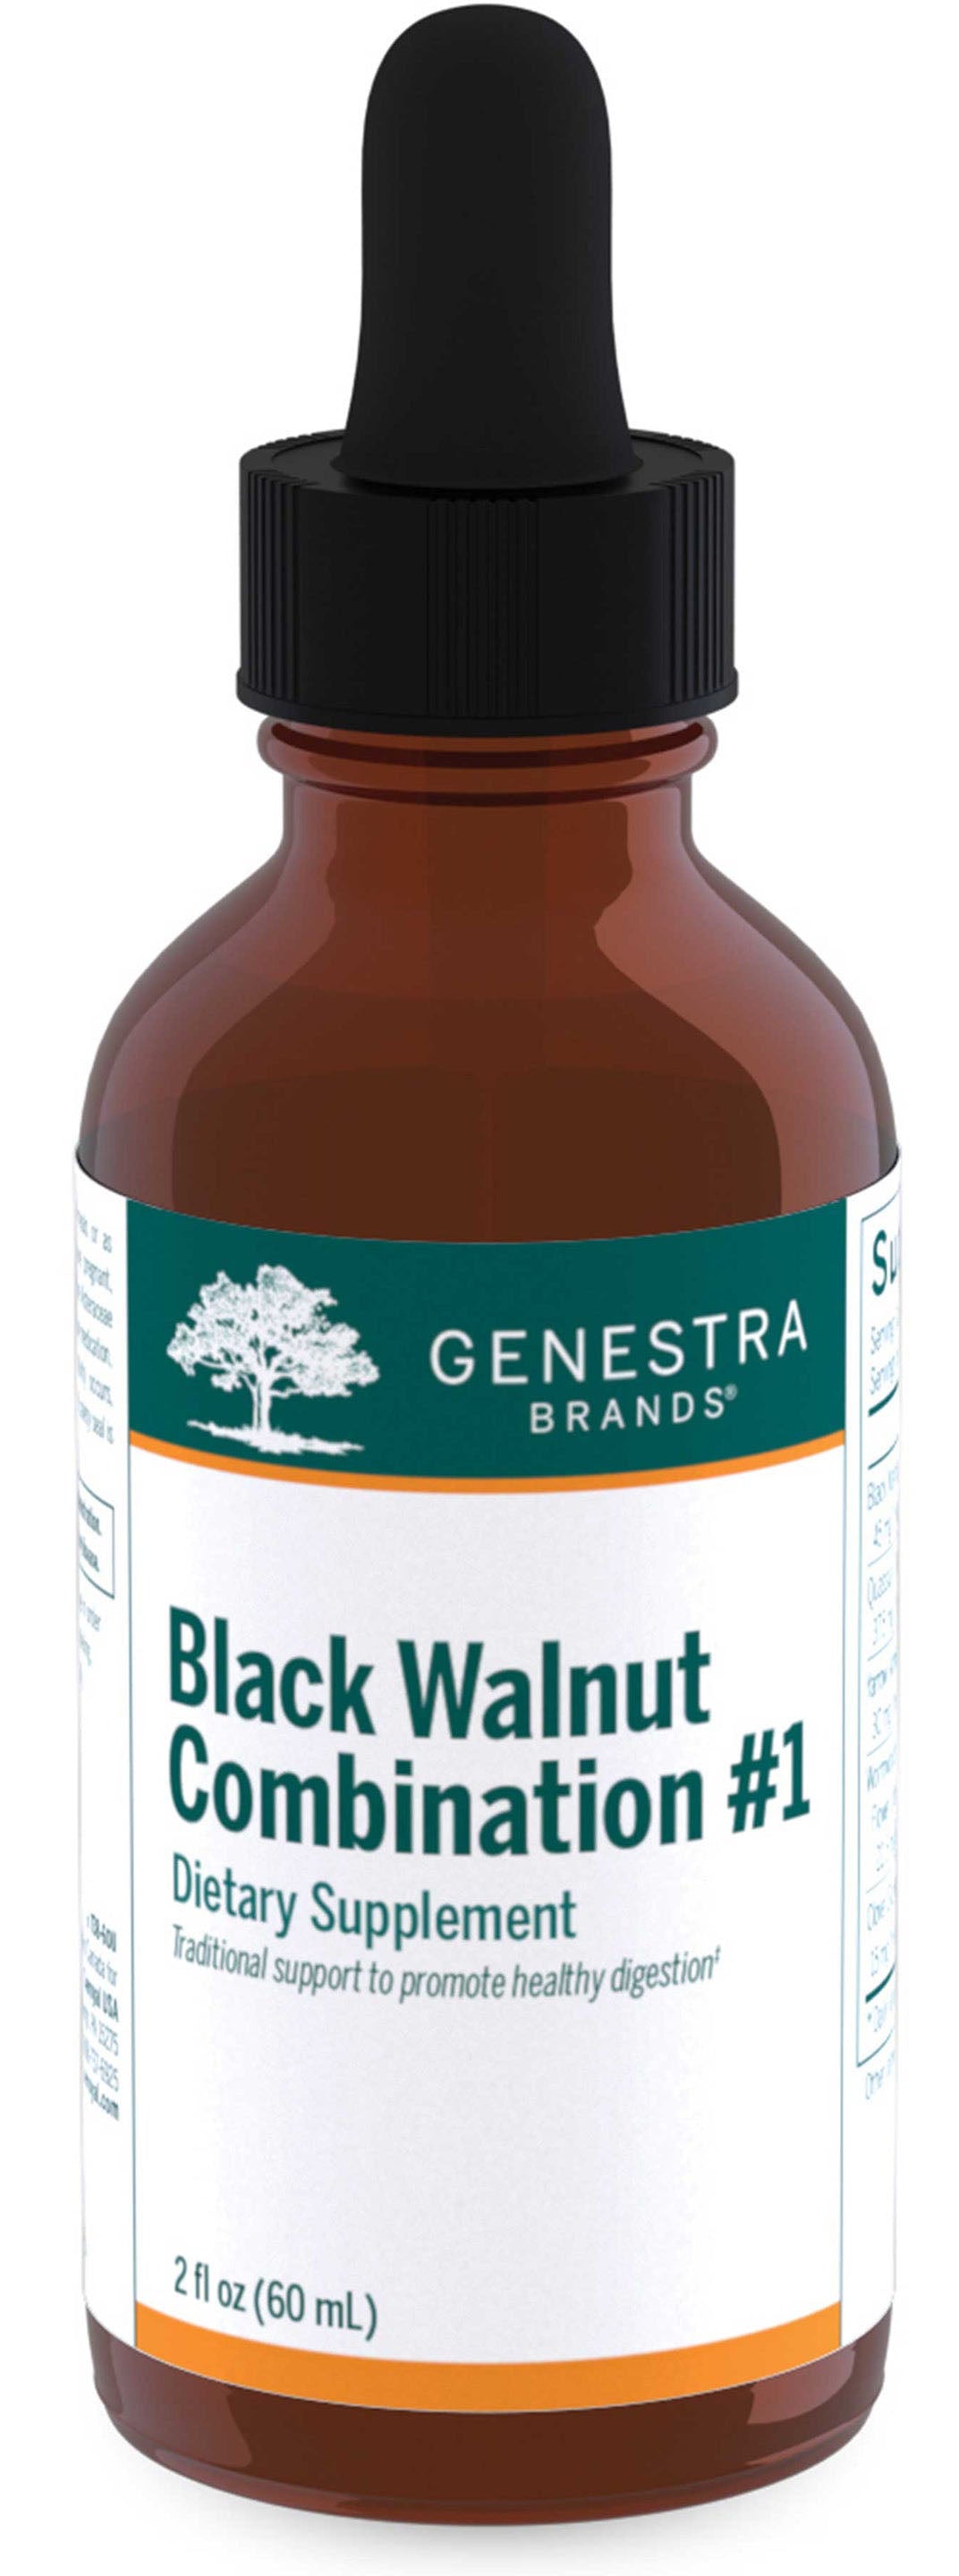 GENESTRA Black Walnut Combination #1 (60 ml)